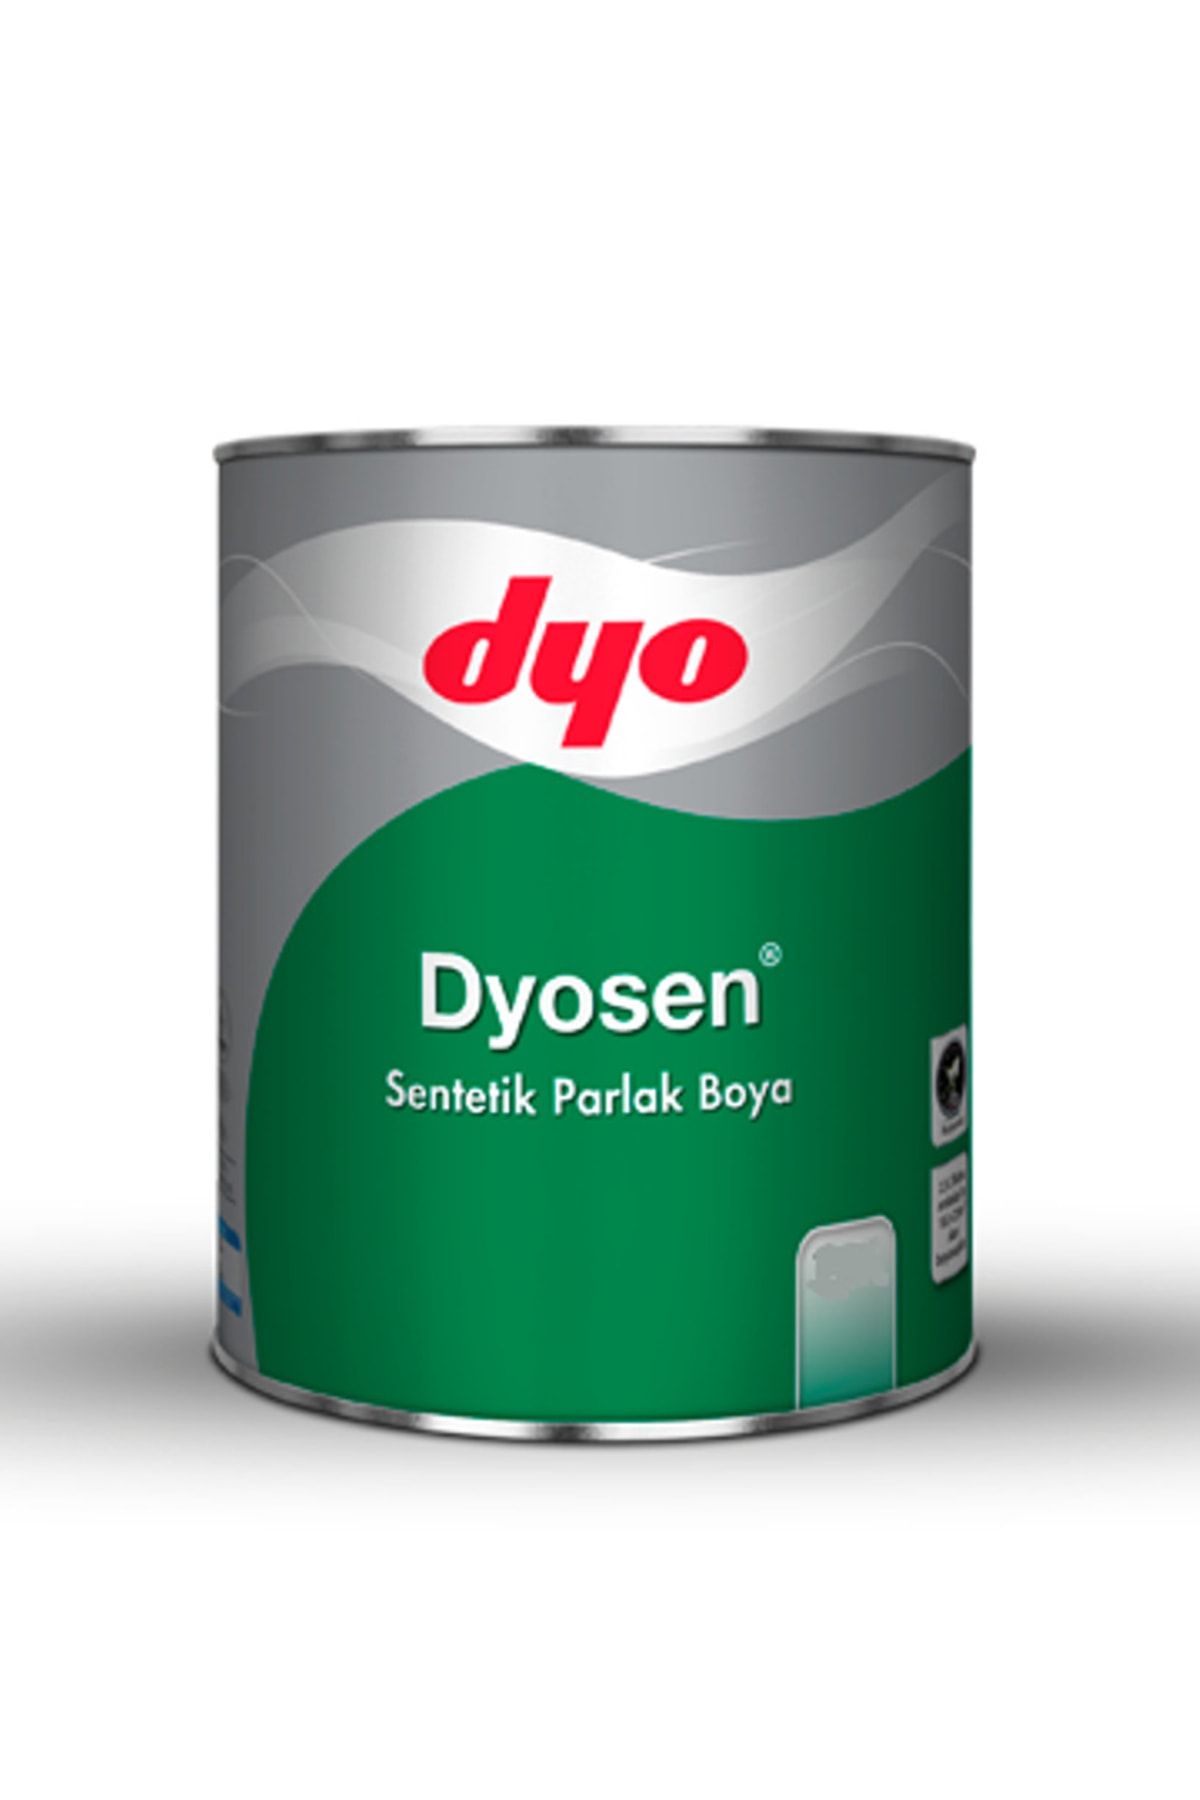 Dyo Dyosen Sentetik Parlak Boya 0,75 litre (Şampanya)